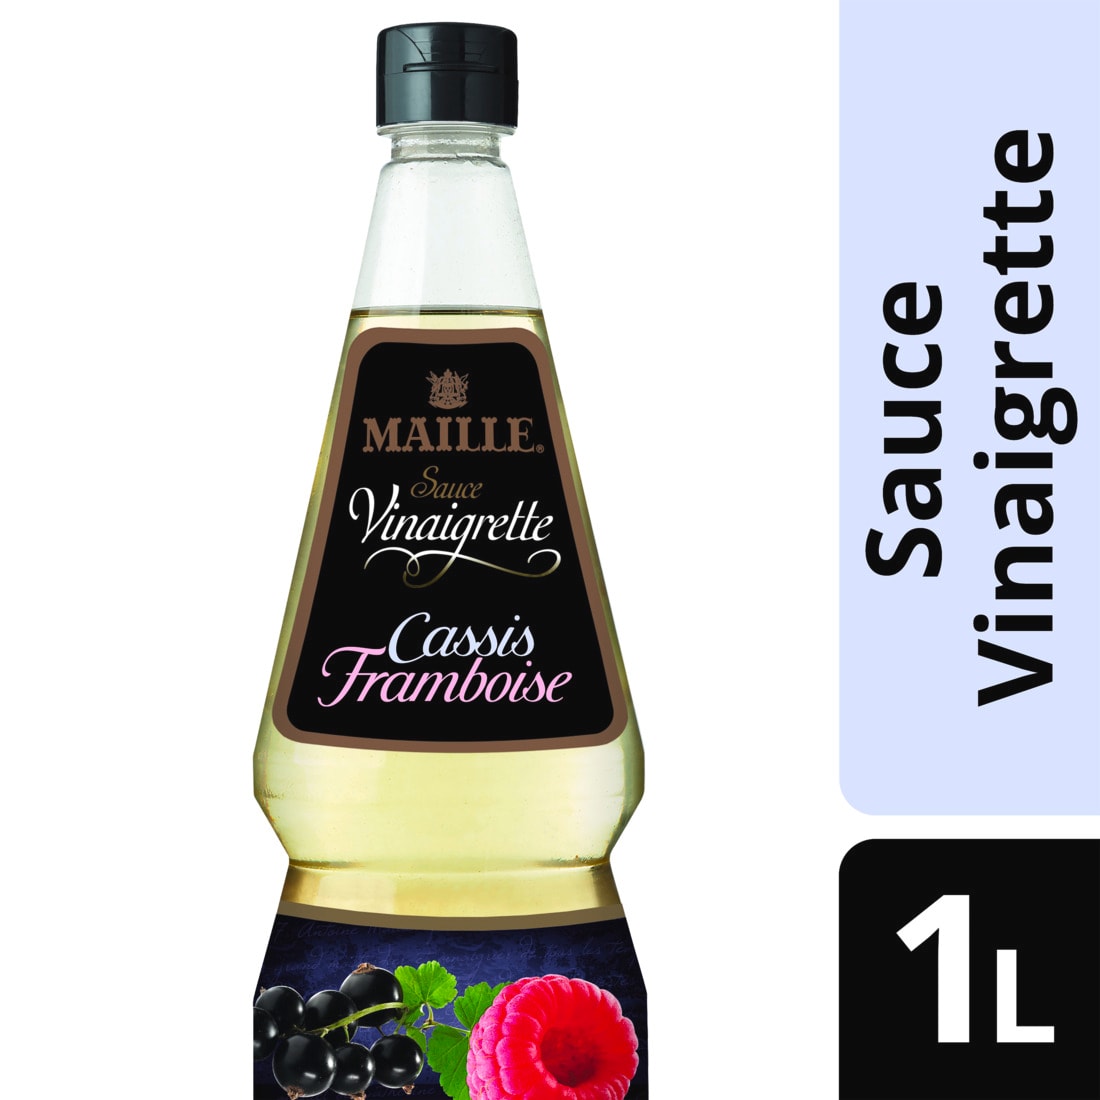 Maille Sauce Vinaigrette Cassis-Framboise 1L - 